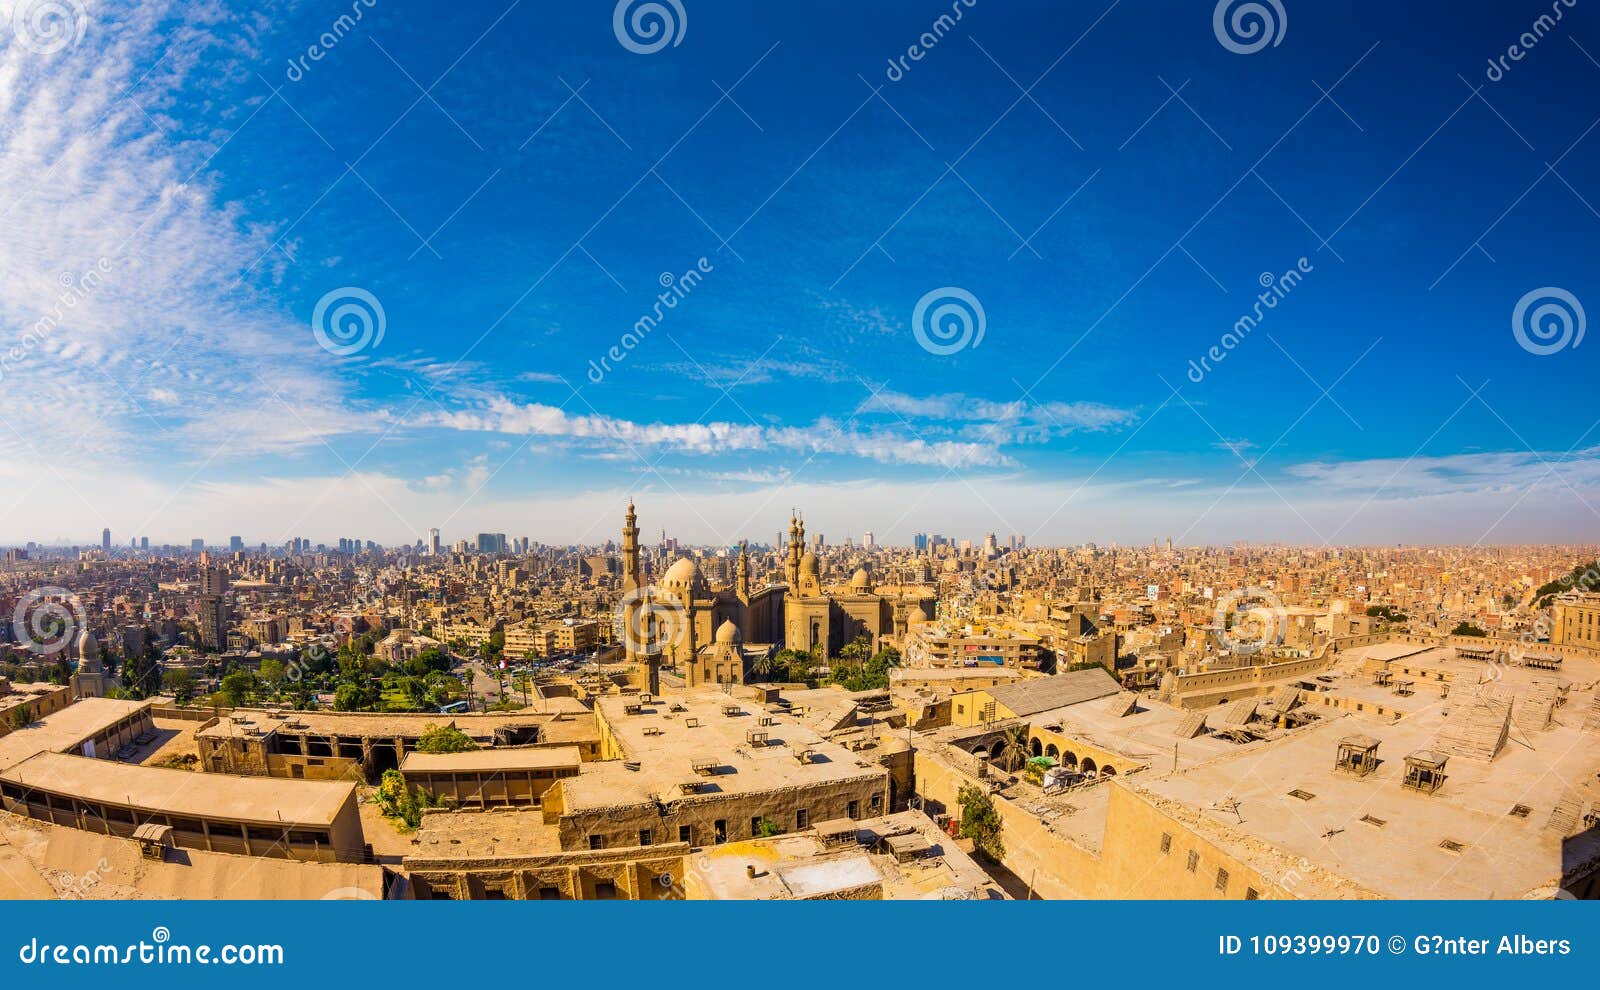 panorama of the skyline of cairo